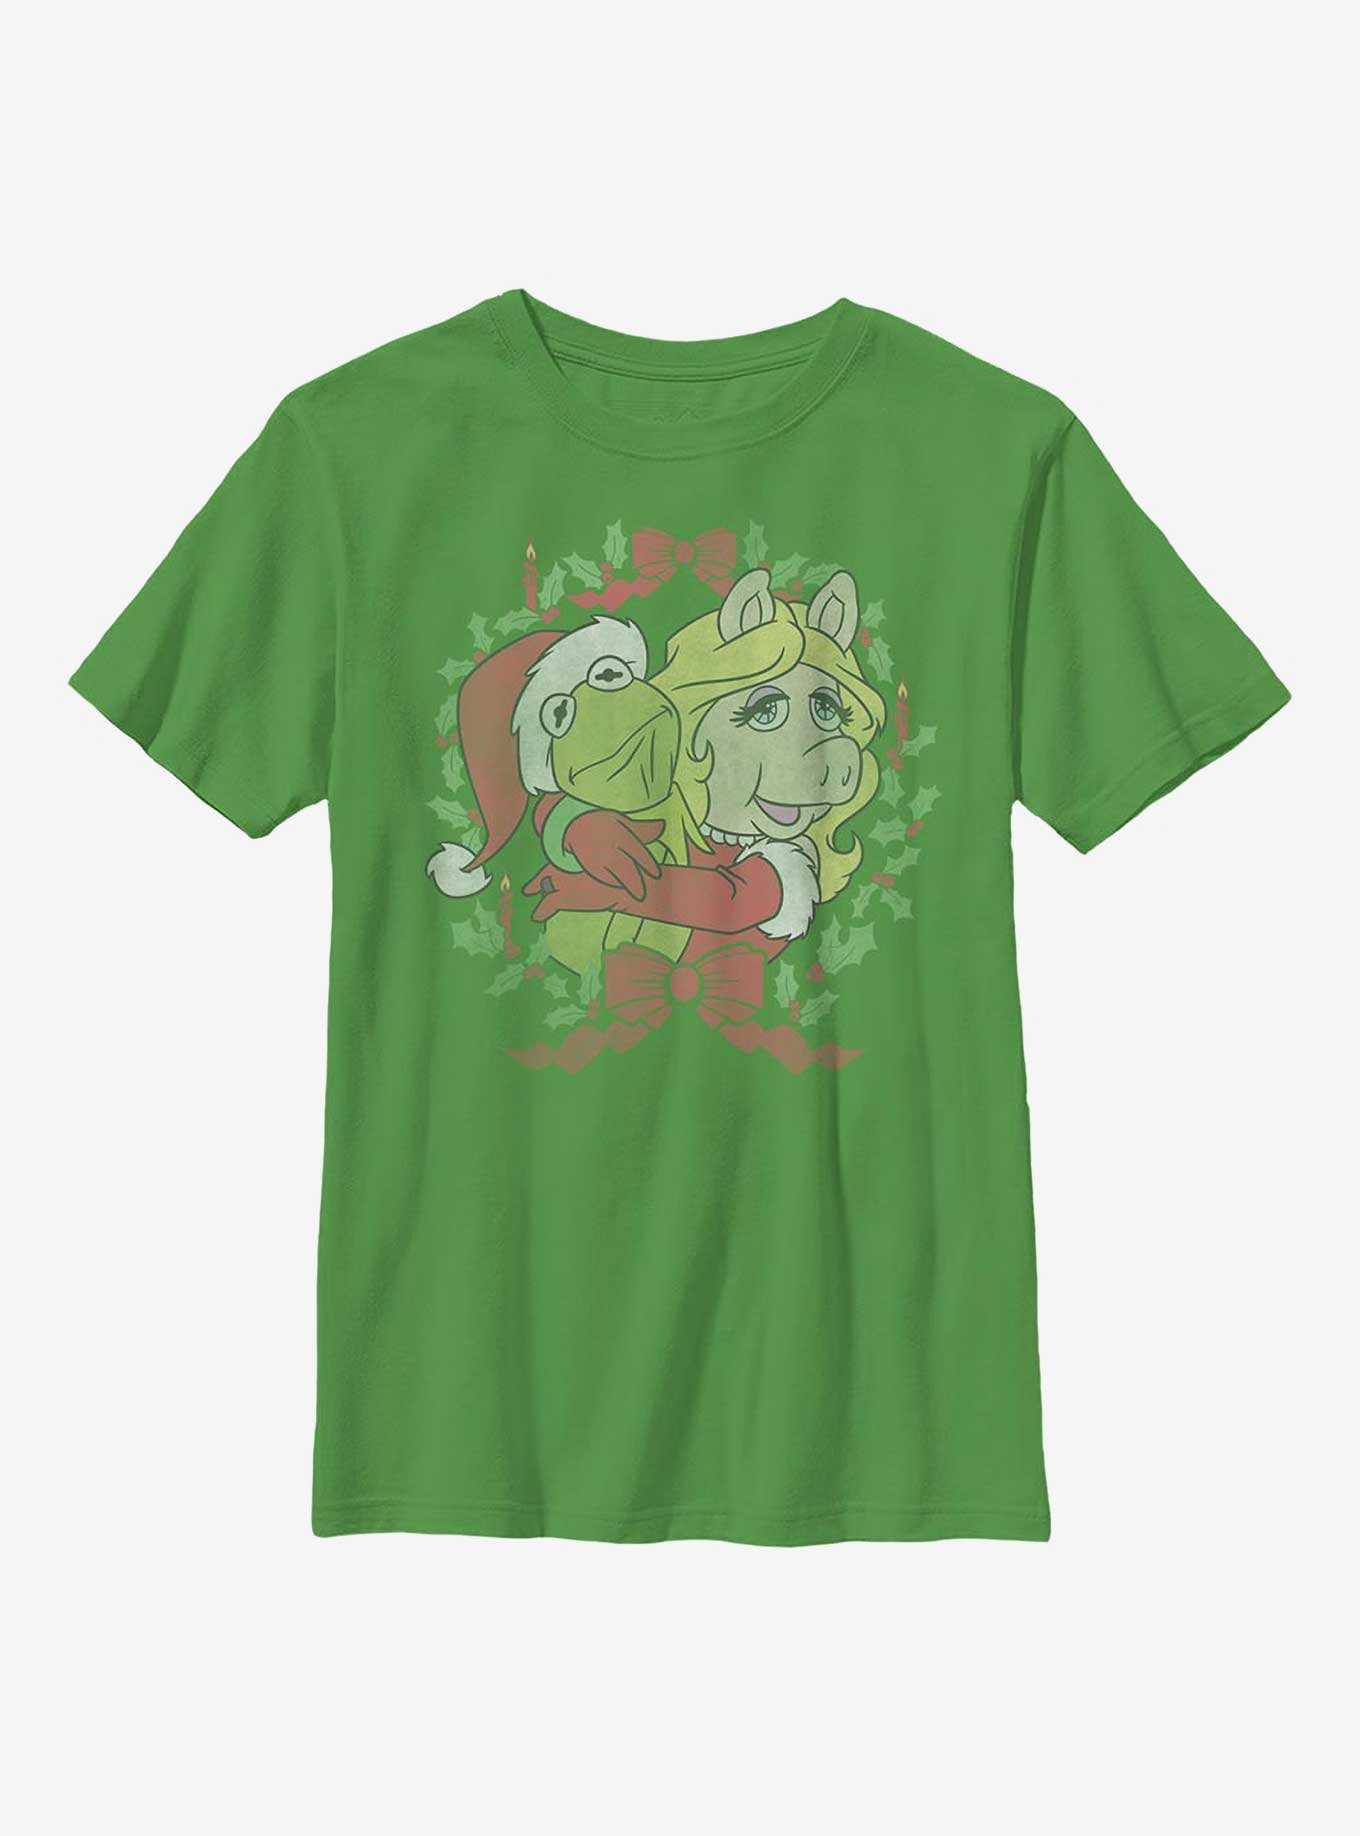 Disney The Muppets Kermit & Miss Piggy Wreath Love Youth T-Shirt, , hi-res